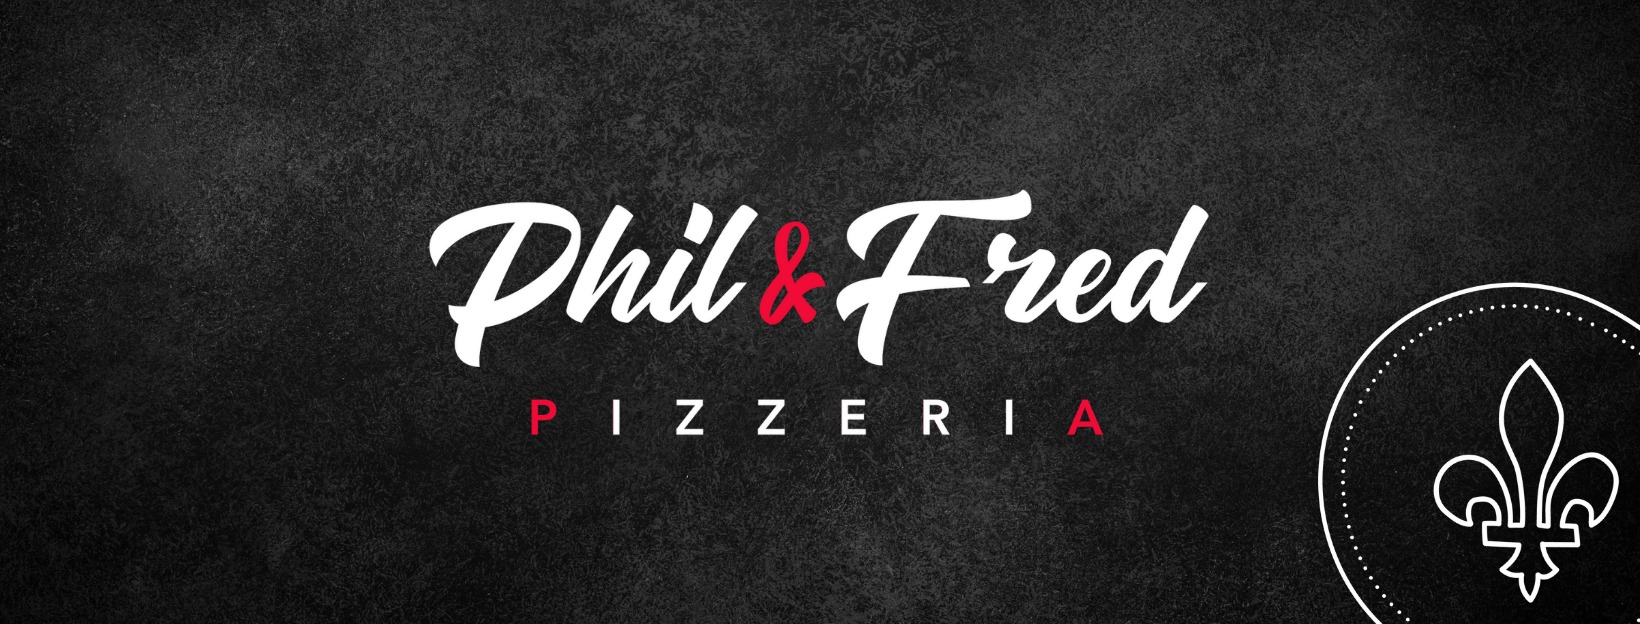 Phil et Fred Pizzeria - Restaurant Comptoir Livraison